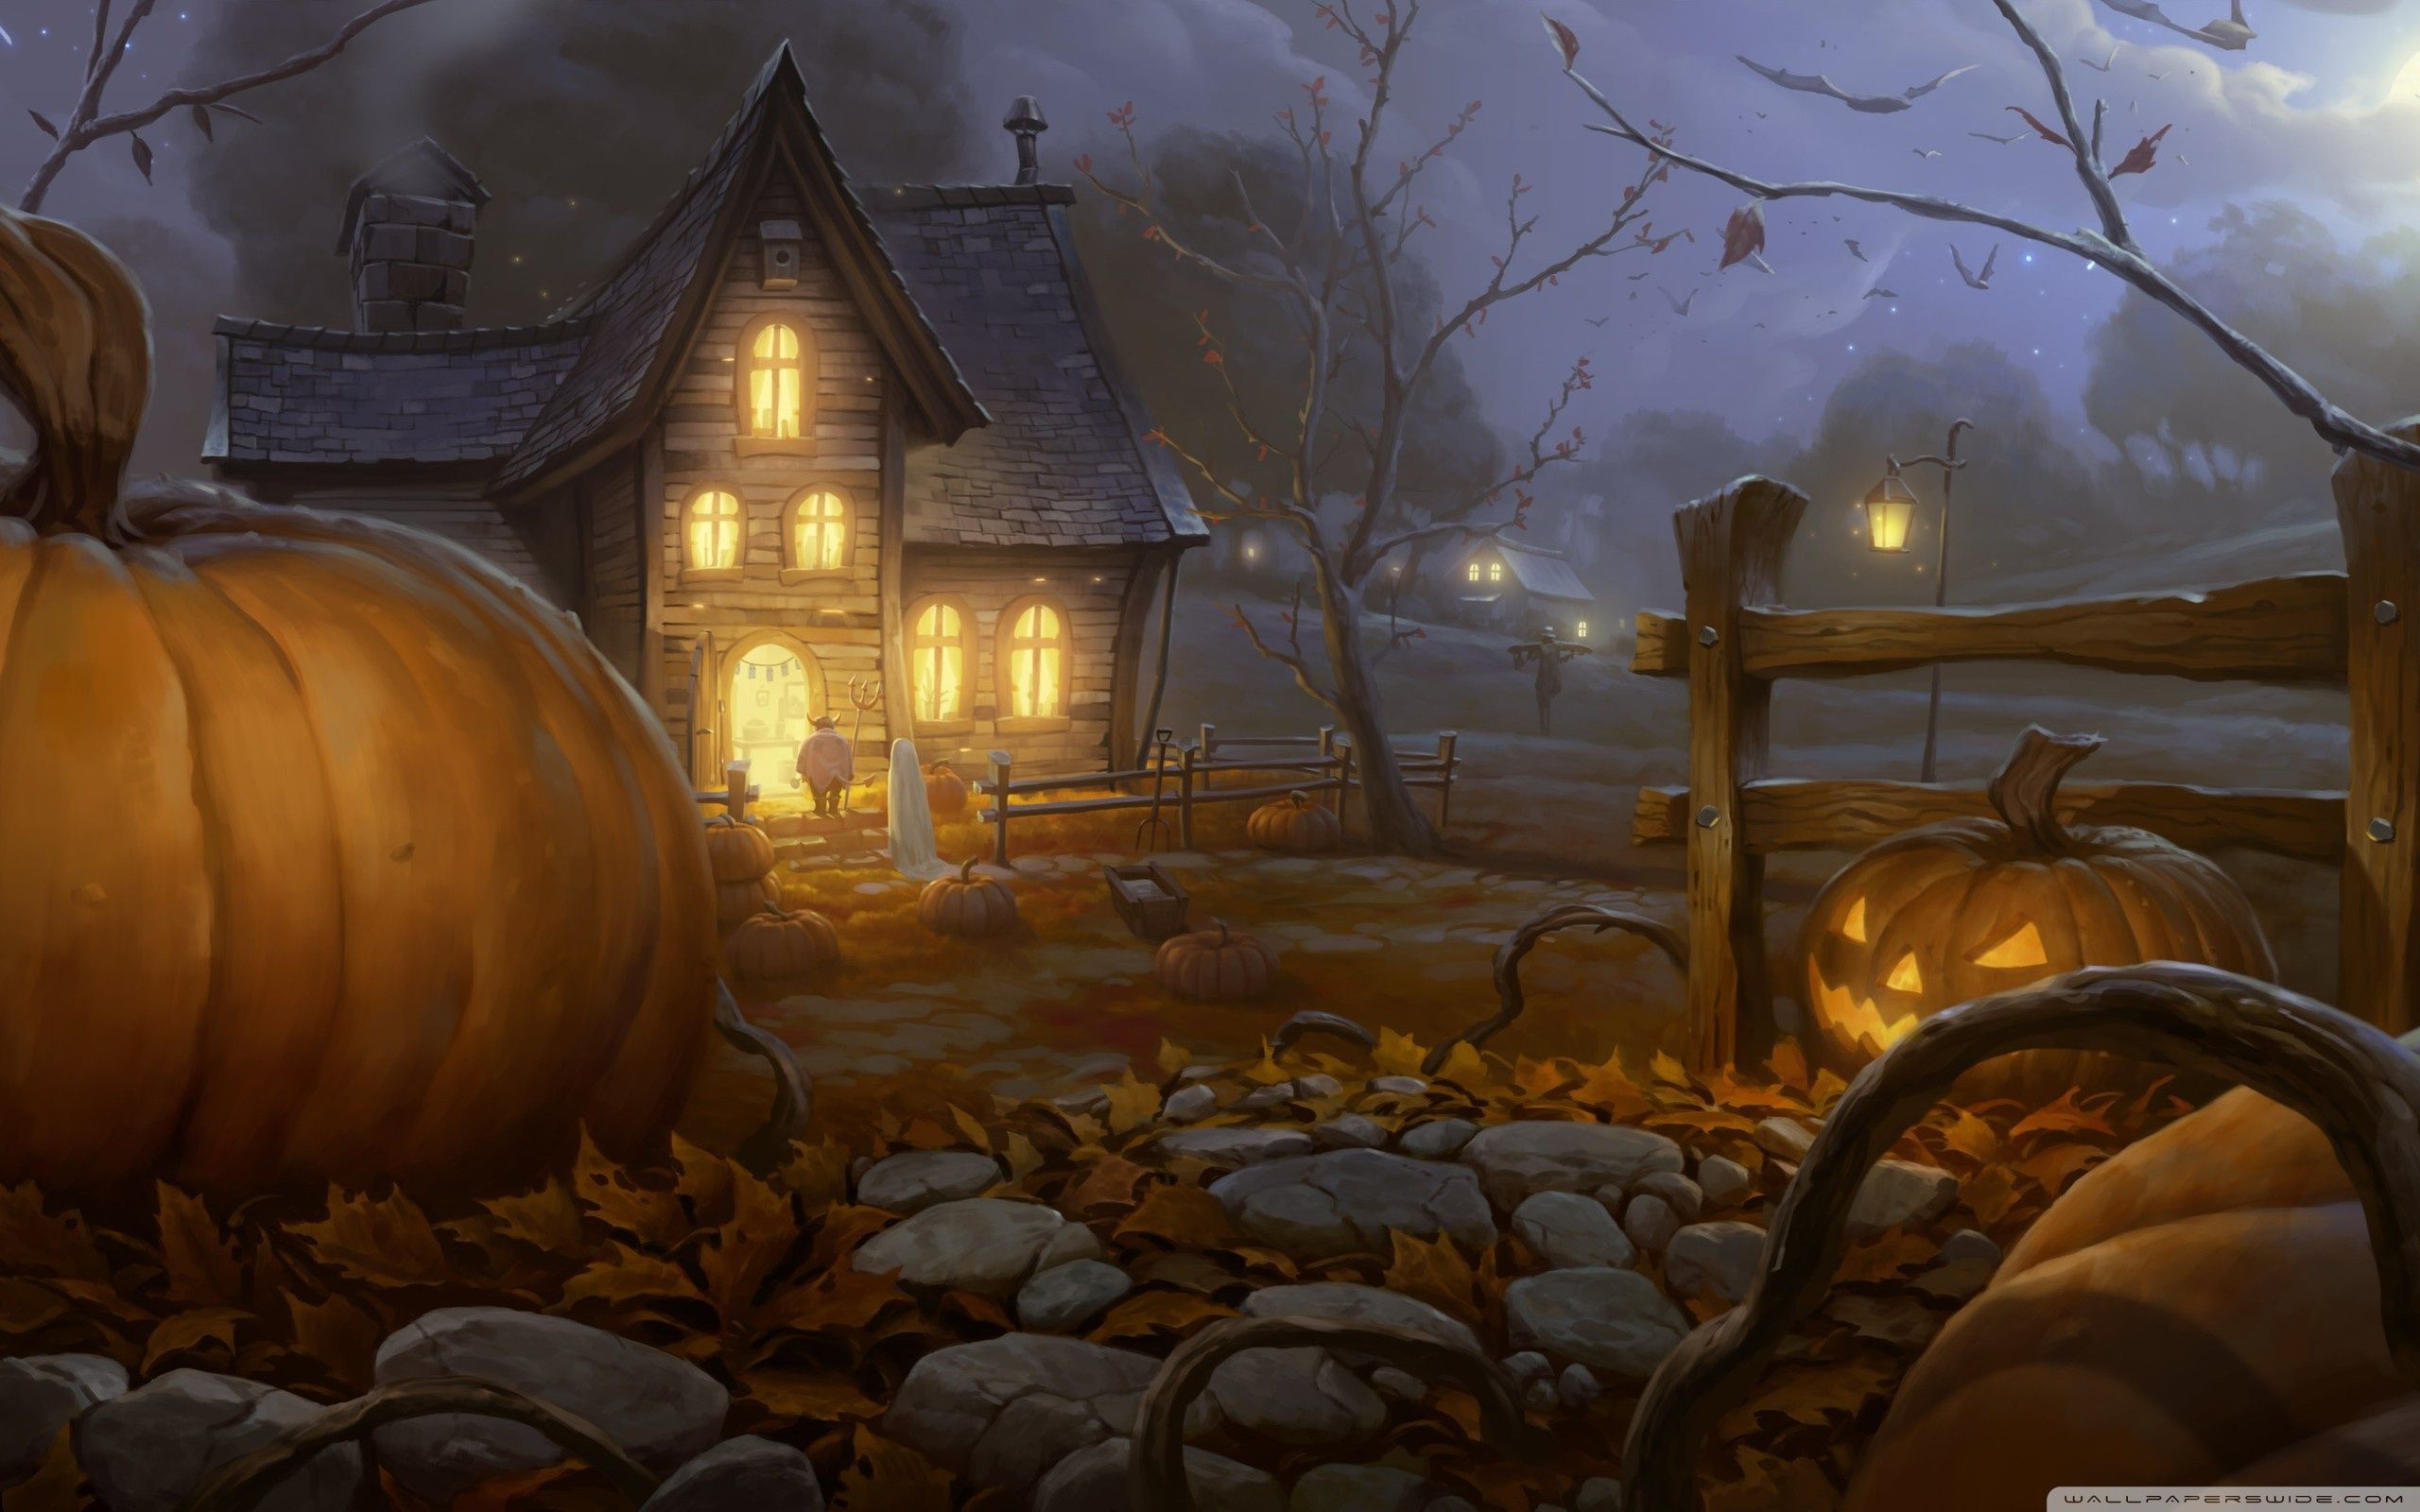 Trick or treating Halloween Autumn Fall Ultra HD Desktop Background Wallpaper for 4K UHD TV, Tablet